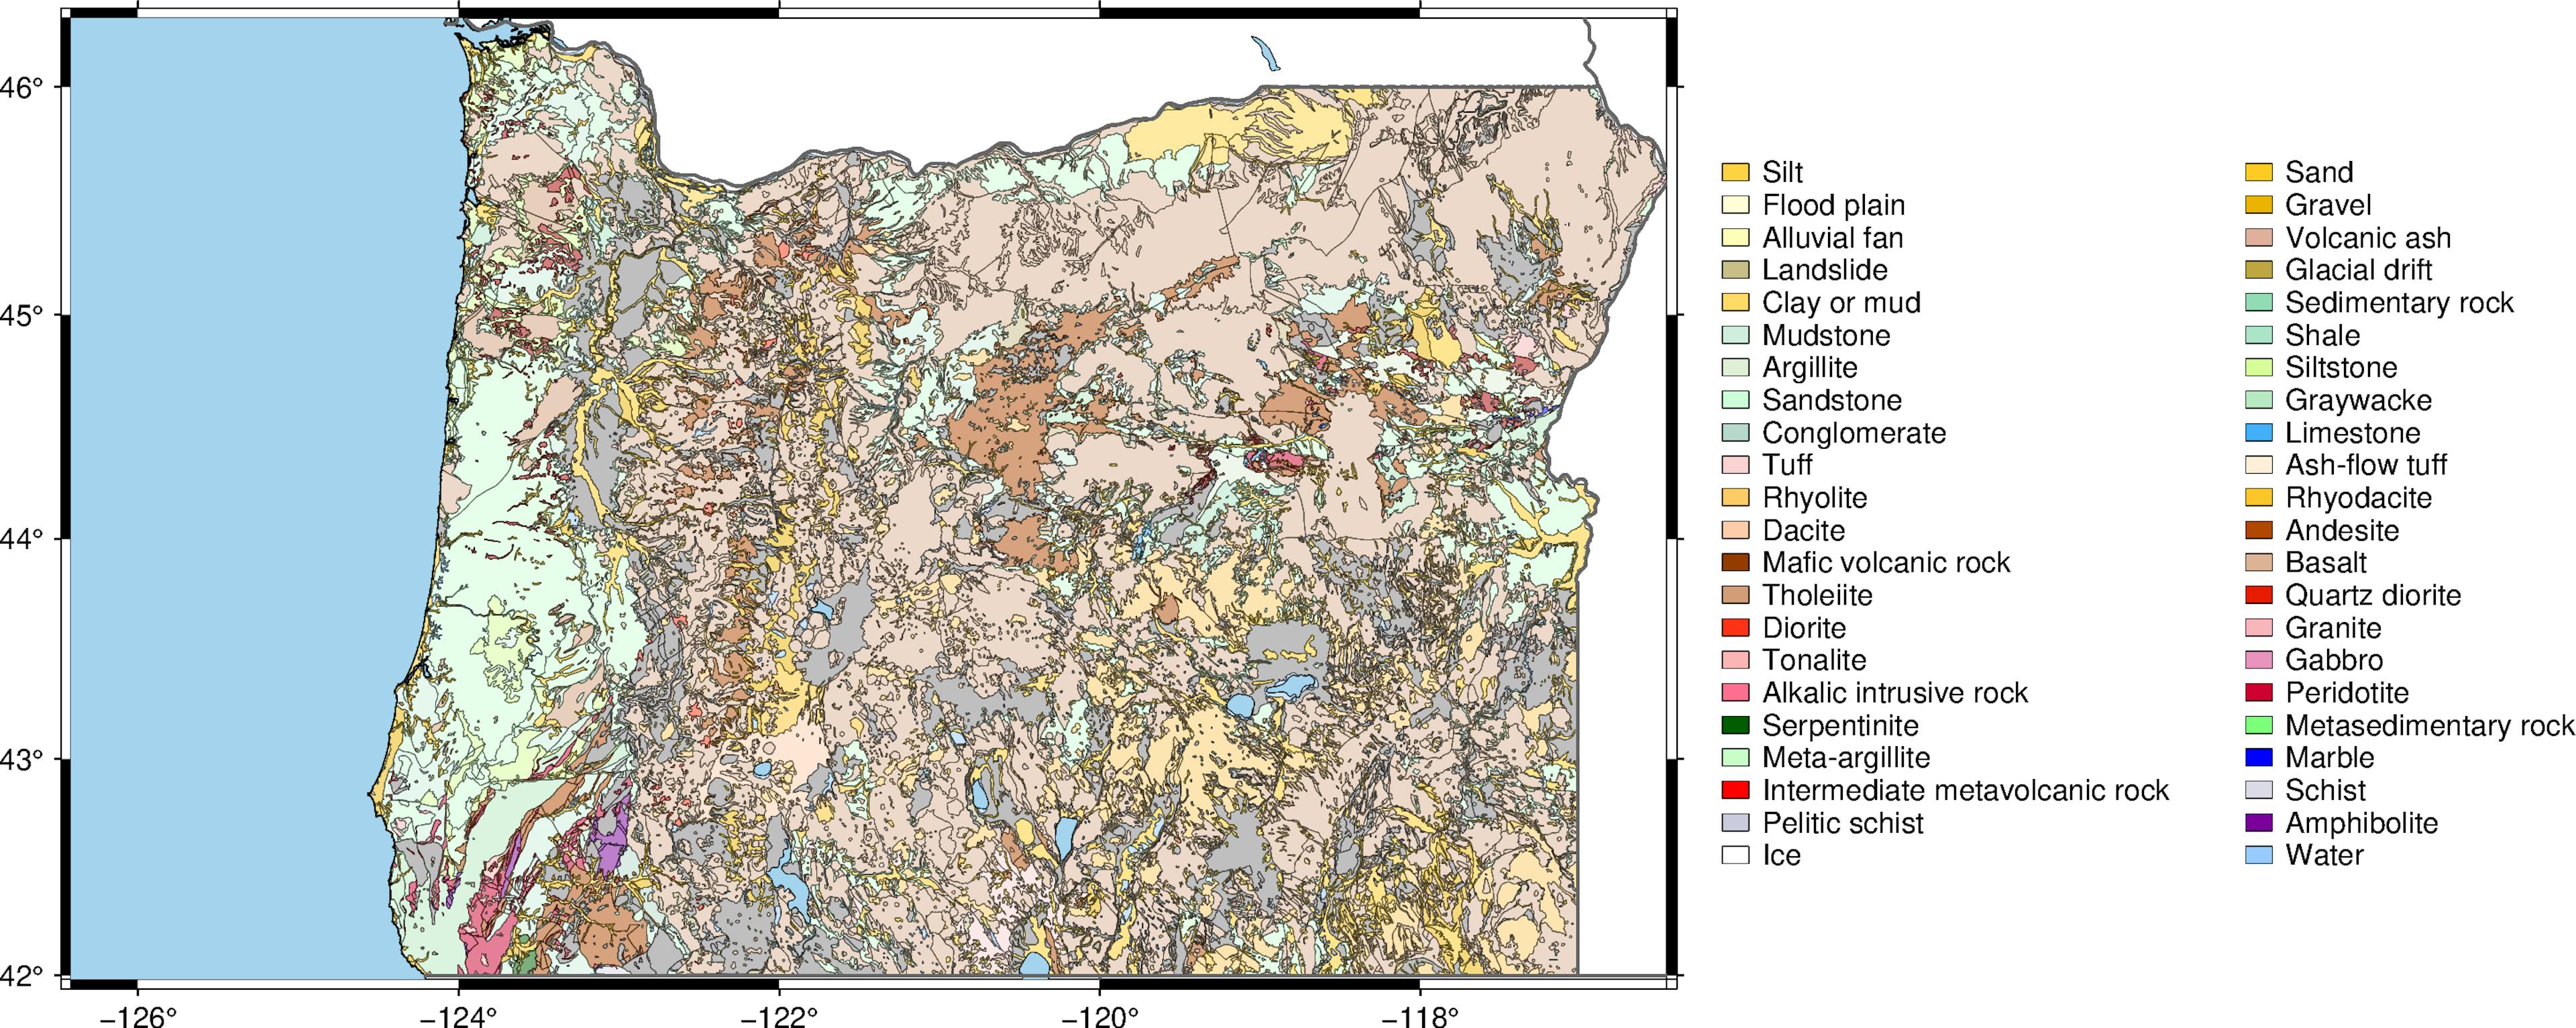 Source data: Walker, G.W. and MacLeod, N.S., 1991, Geologic map of Oregon: U.S. Geological Survey, scale 1:500,000